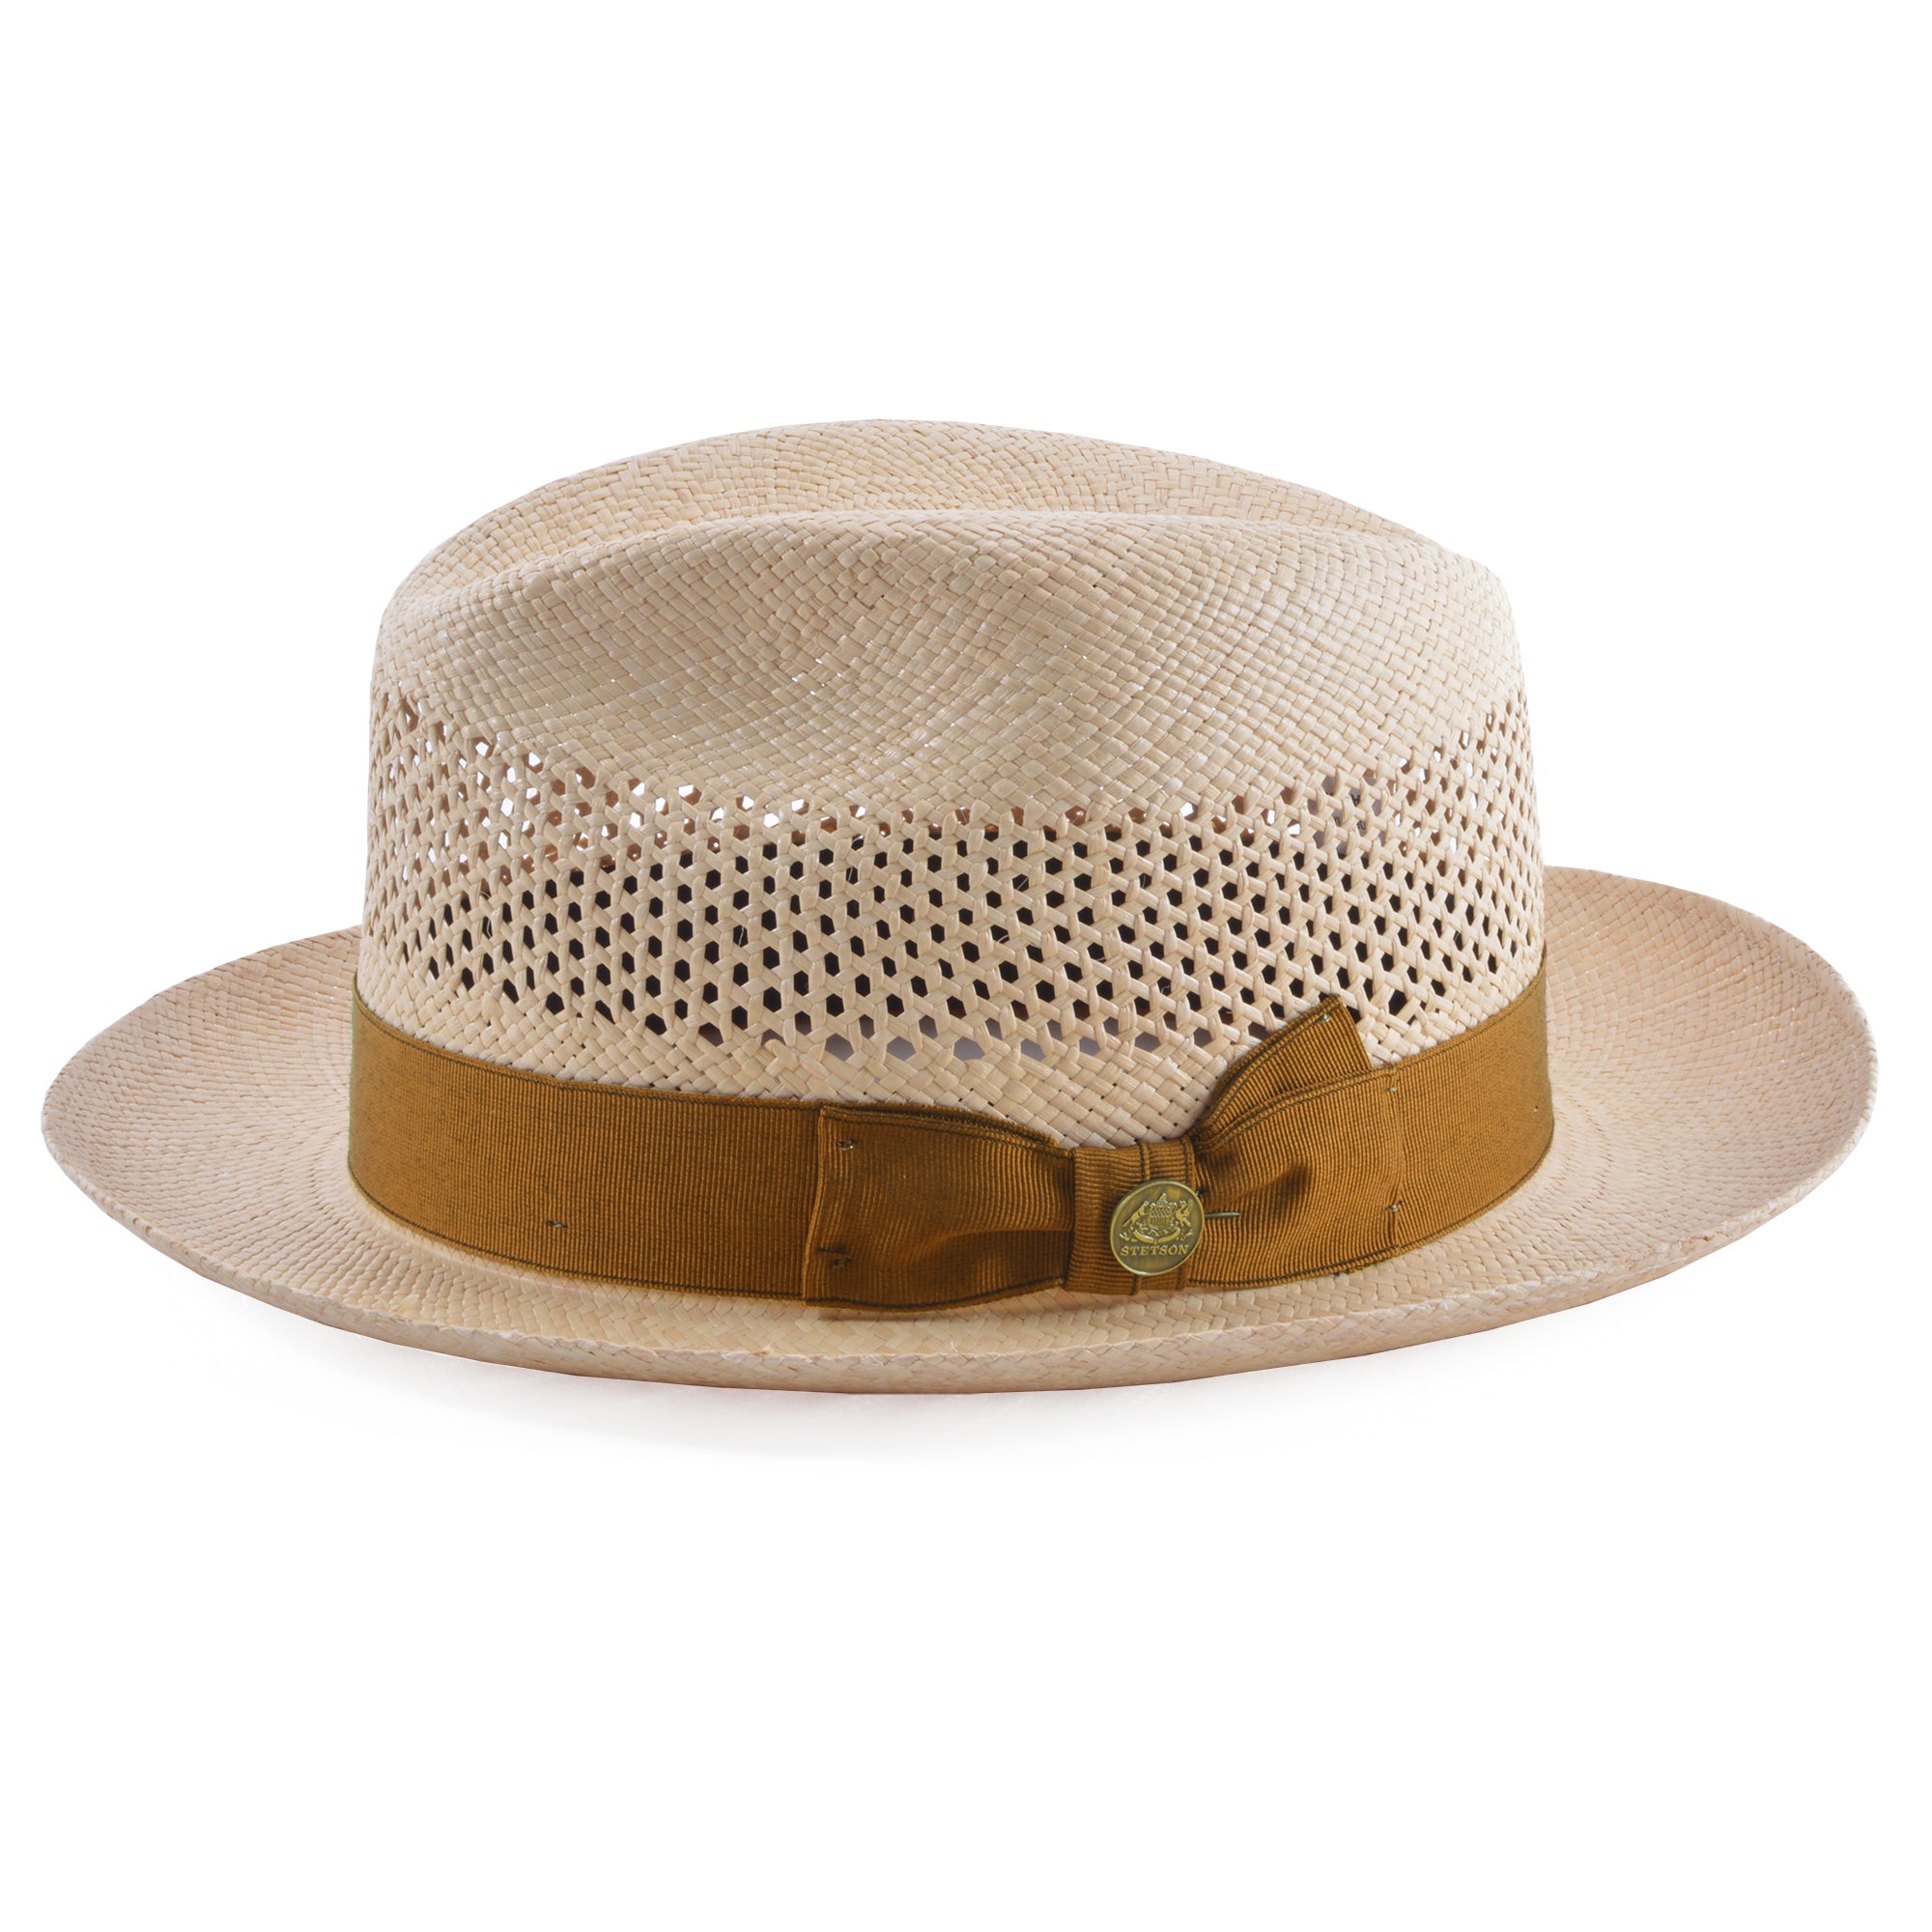 Stetson The Moor Panama Straw Fedora Hat with Box